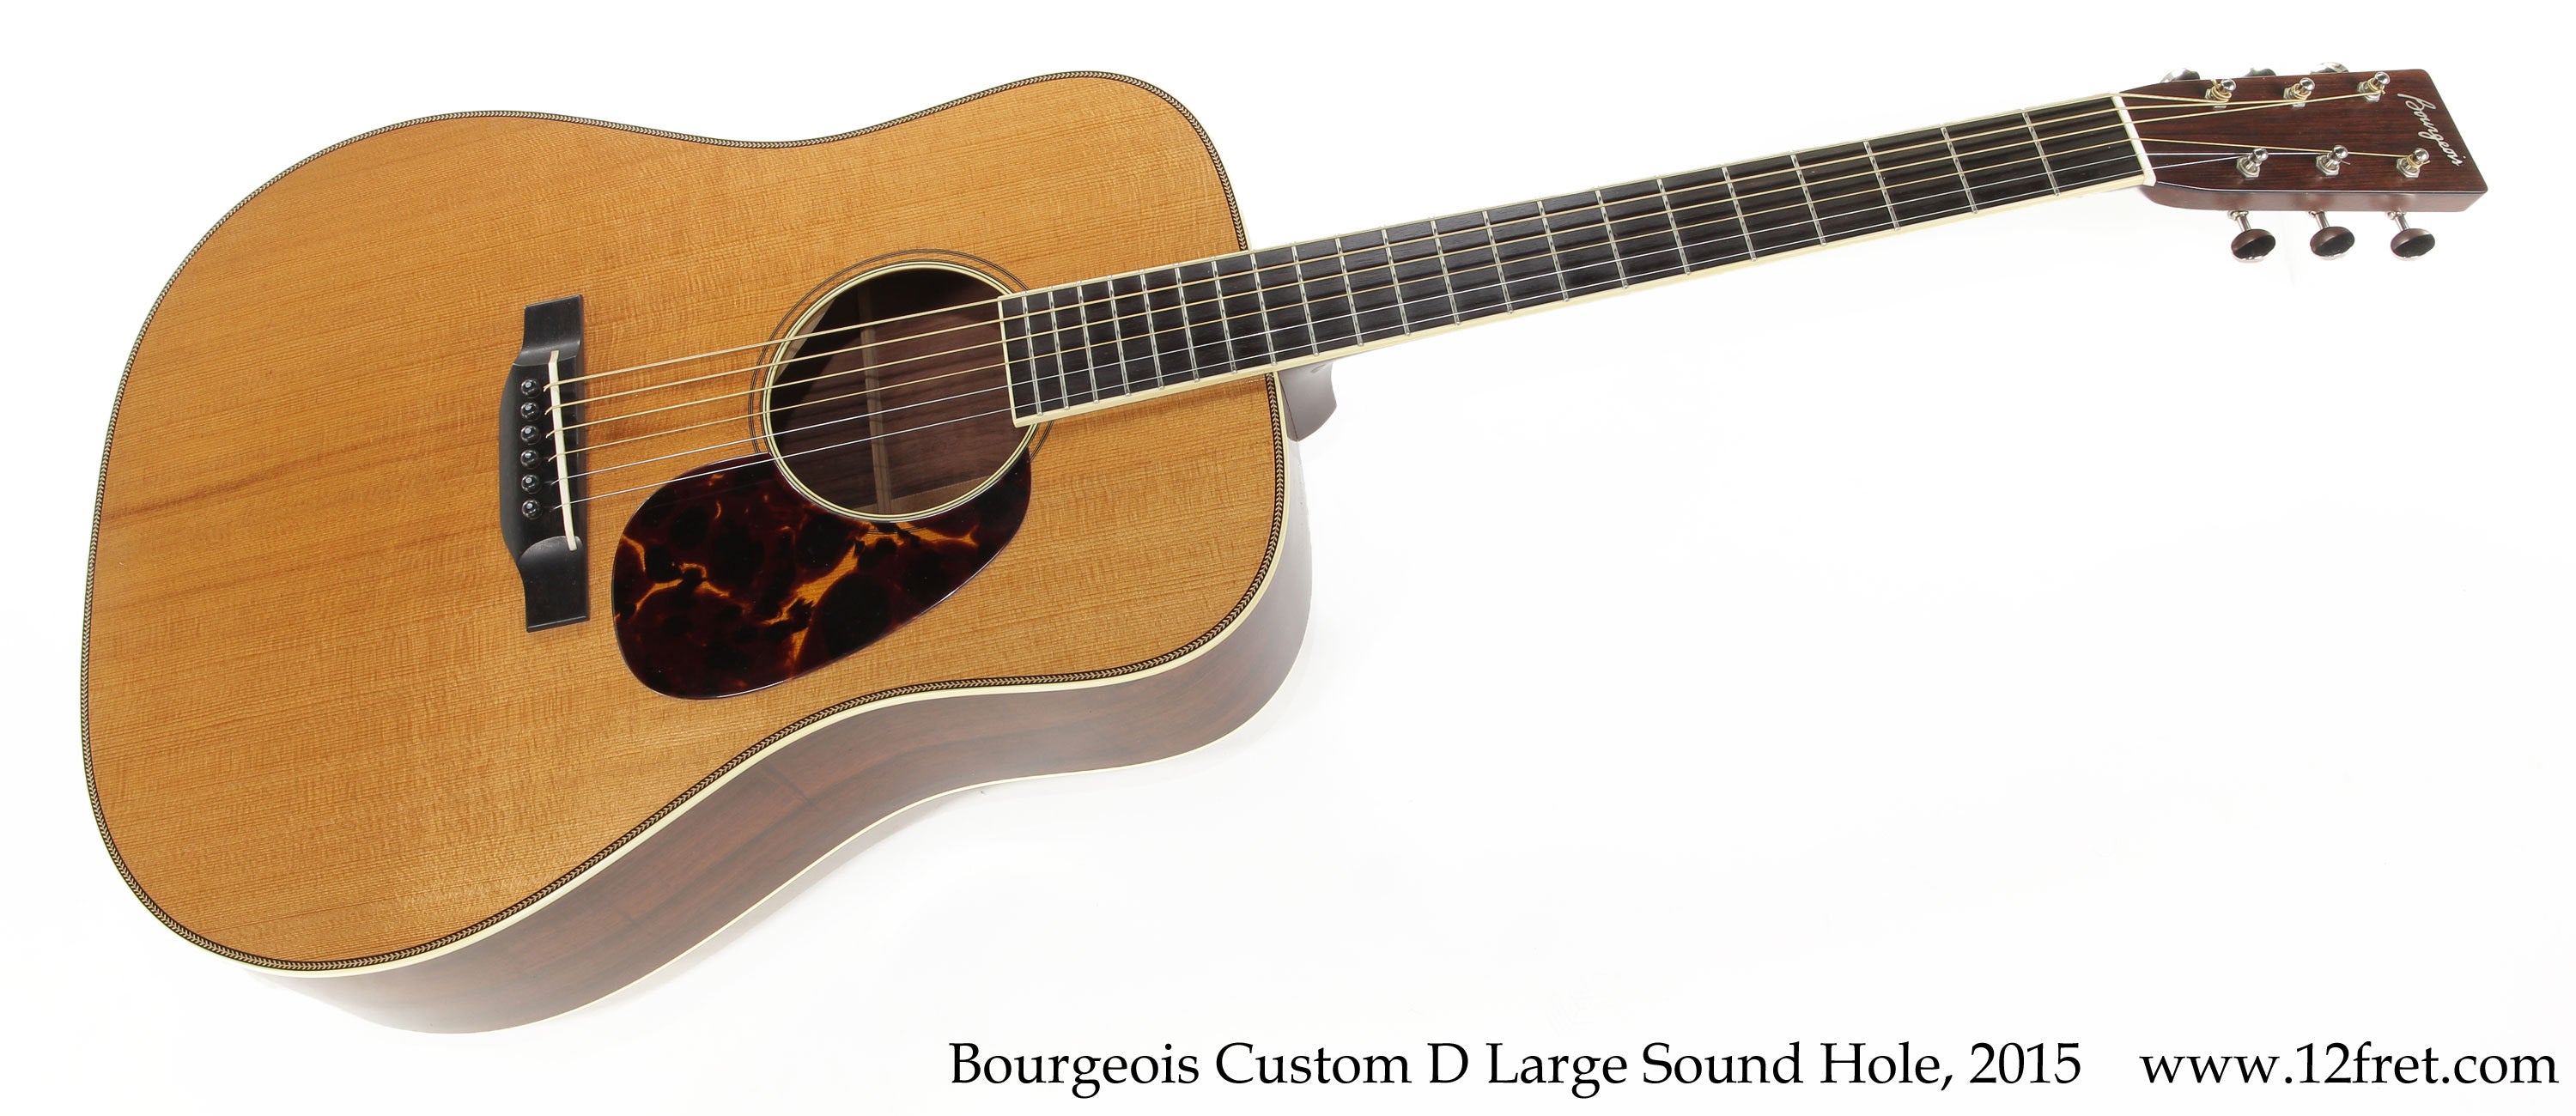 Bourgeois Custom D LSH Large Sound Hole, 2015 - The Twelfth Fret